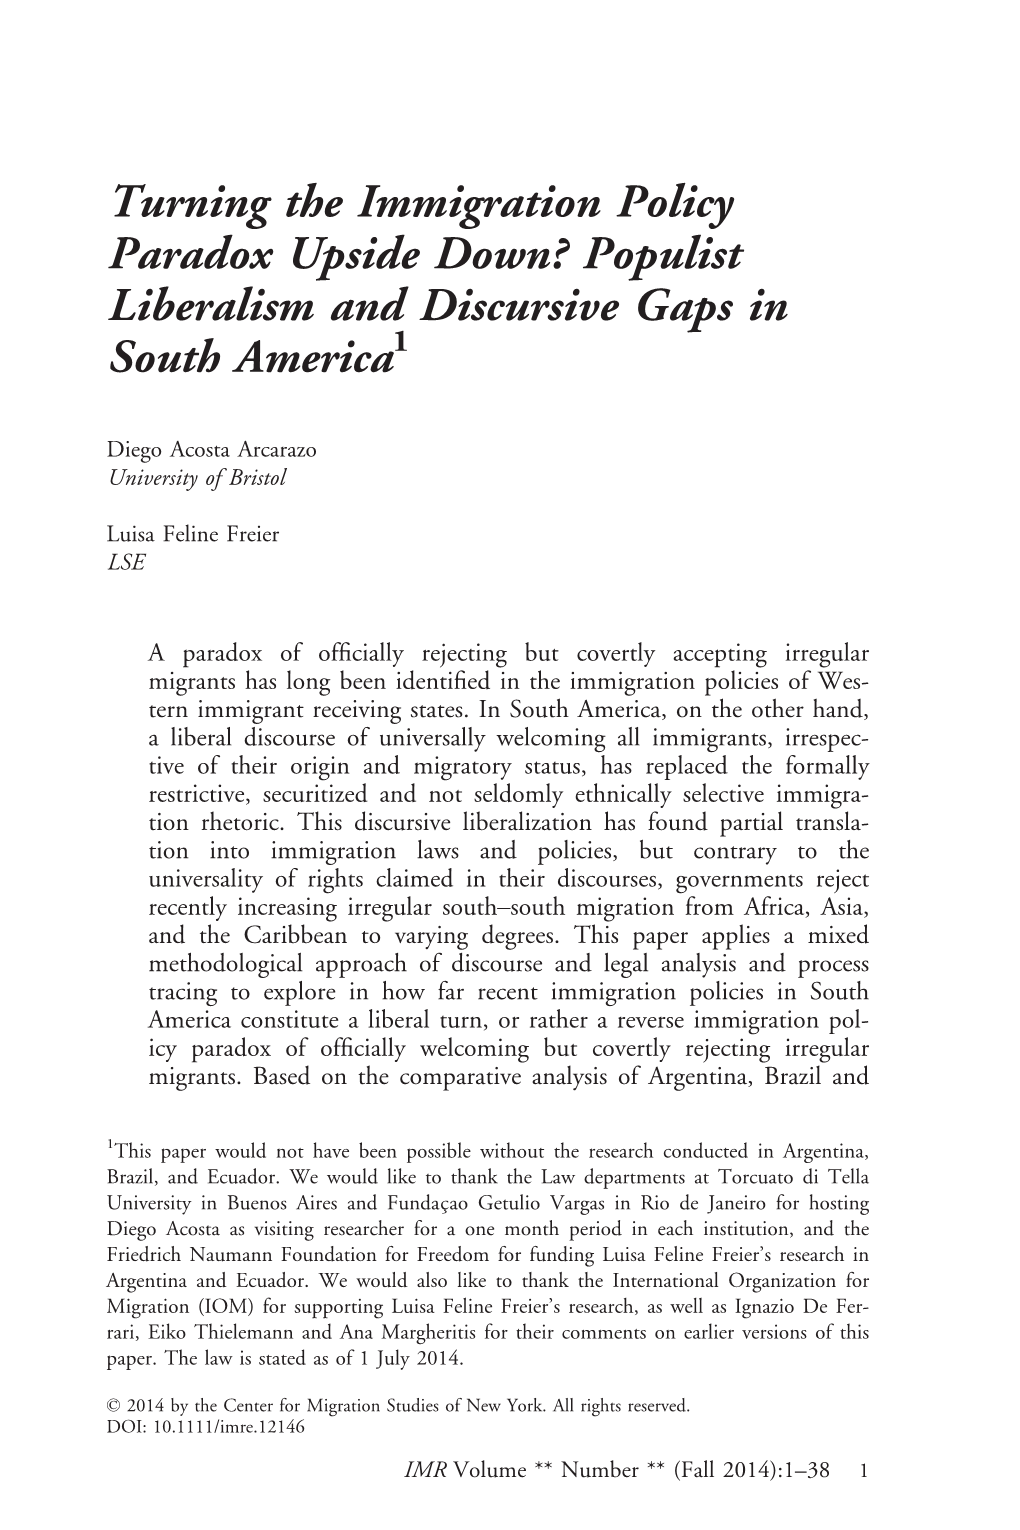 Populist Liberalism and Discursive Gaps in South America